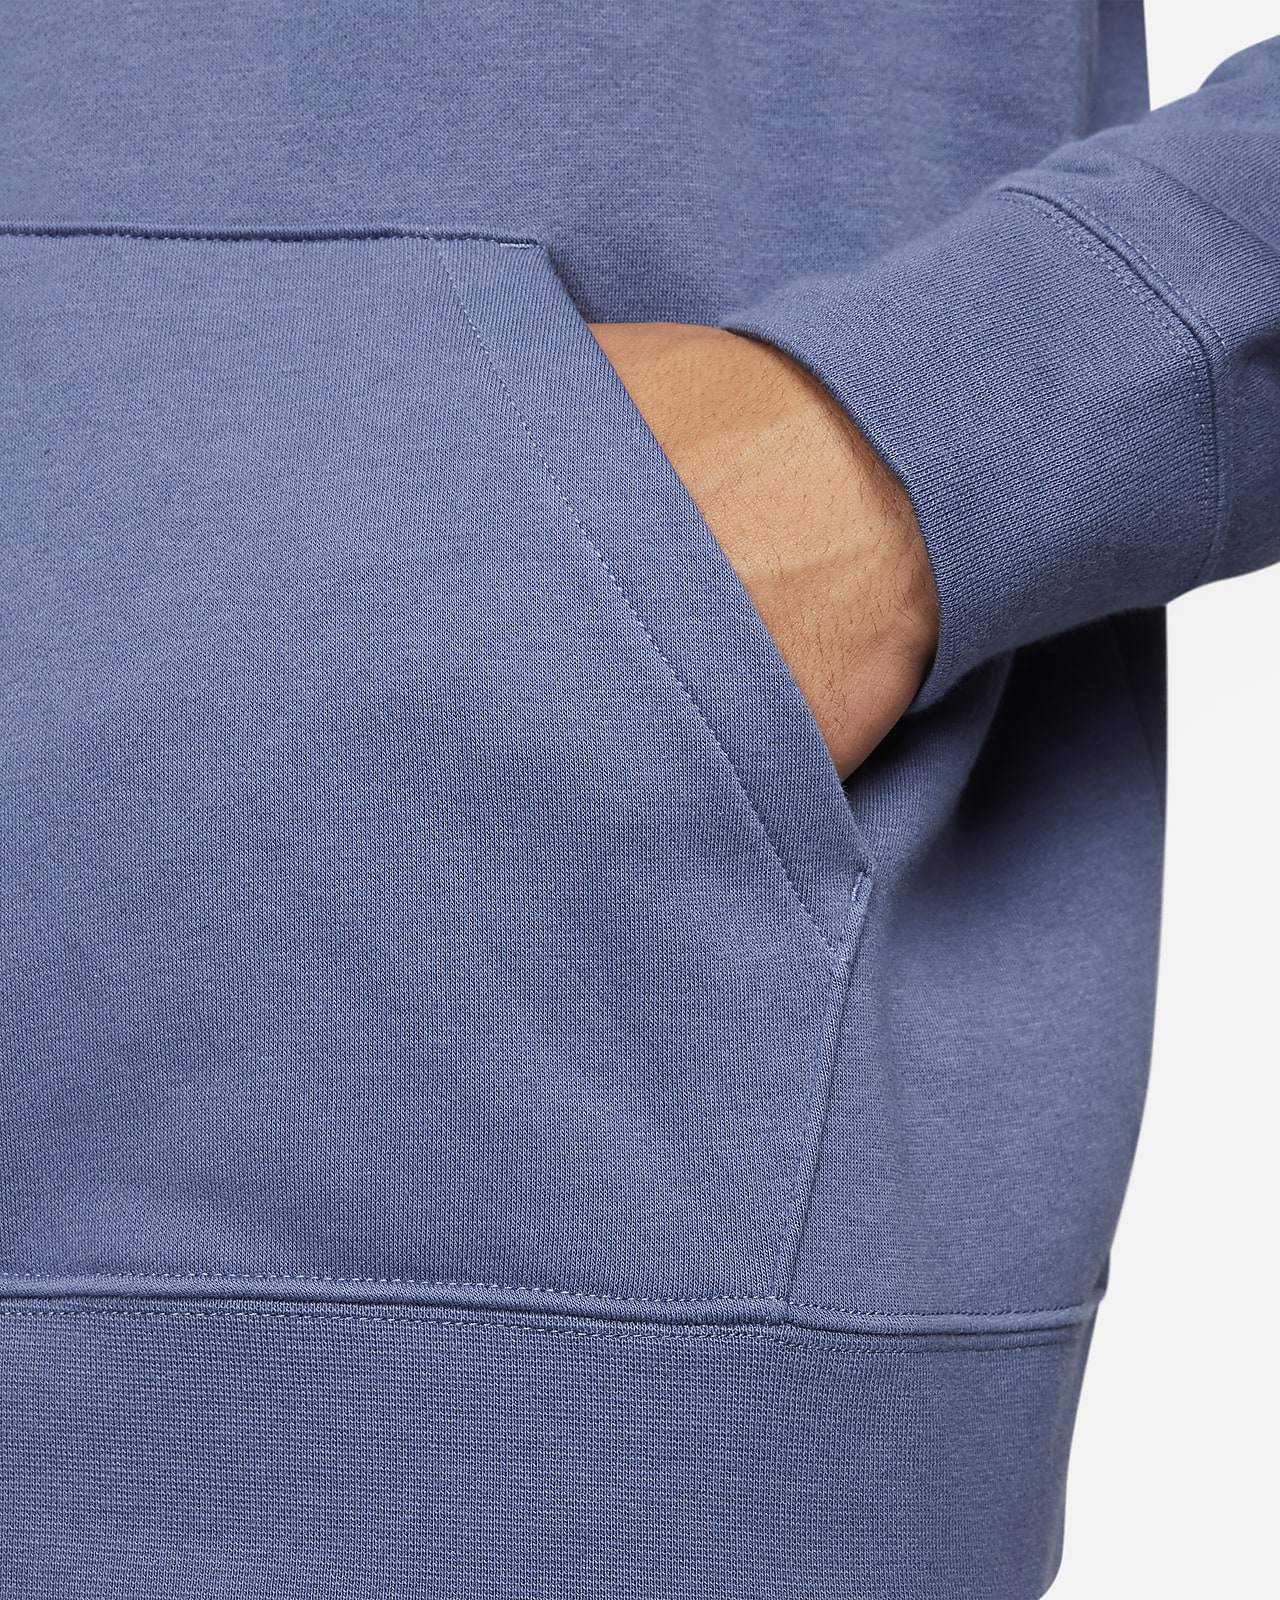 Women's Sweatshirt Jacket With Pocket For Gym 100-Light Blue